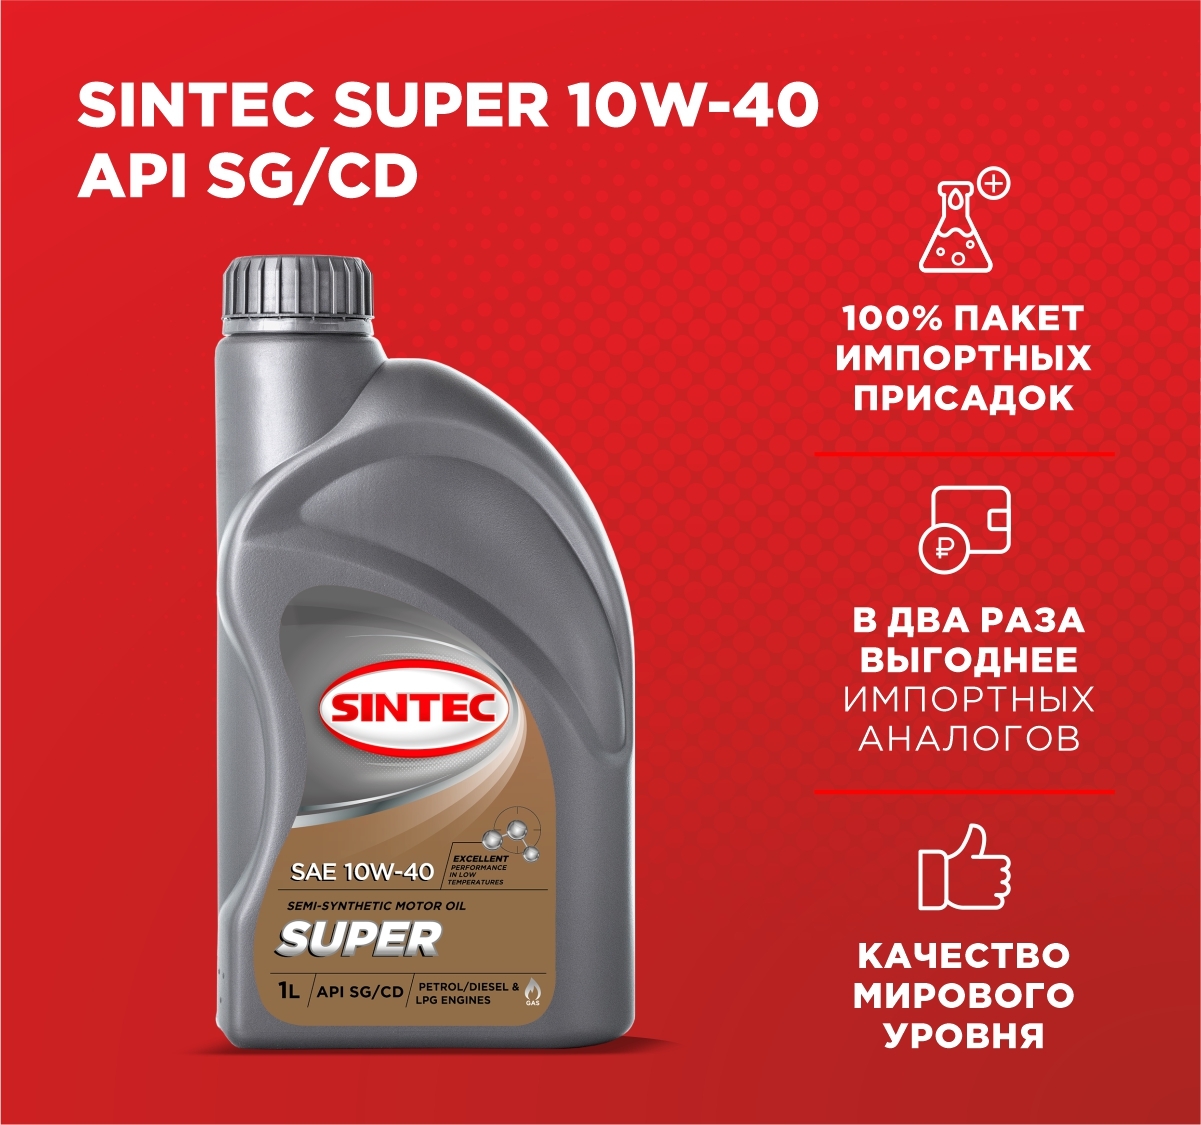 Sintec super 10w-40 SAE API SG. Синтек супер 10w 40 1 лит артикул.